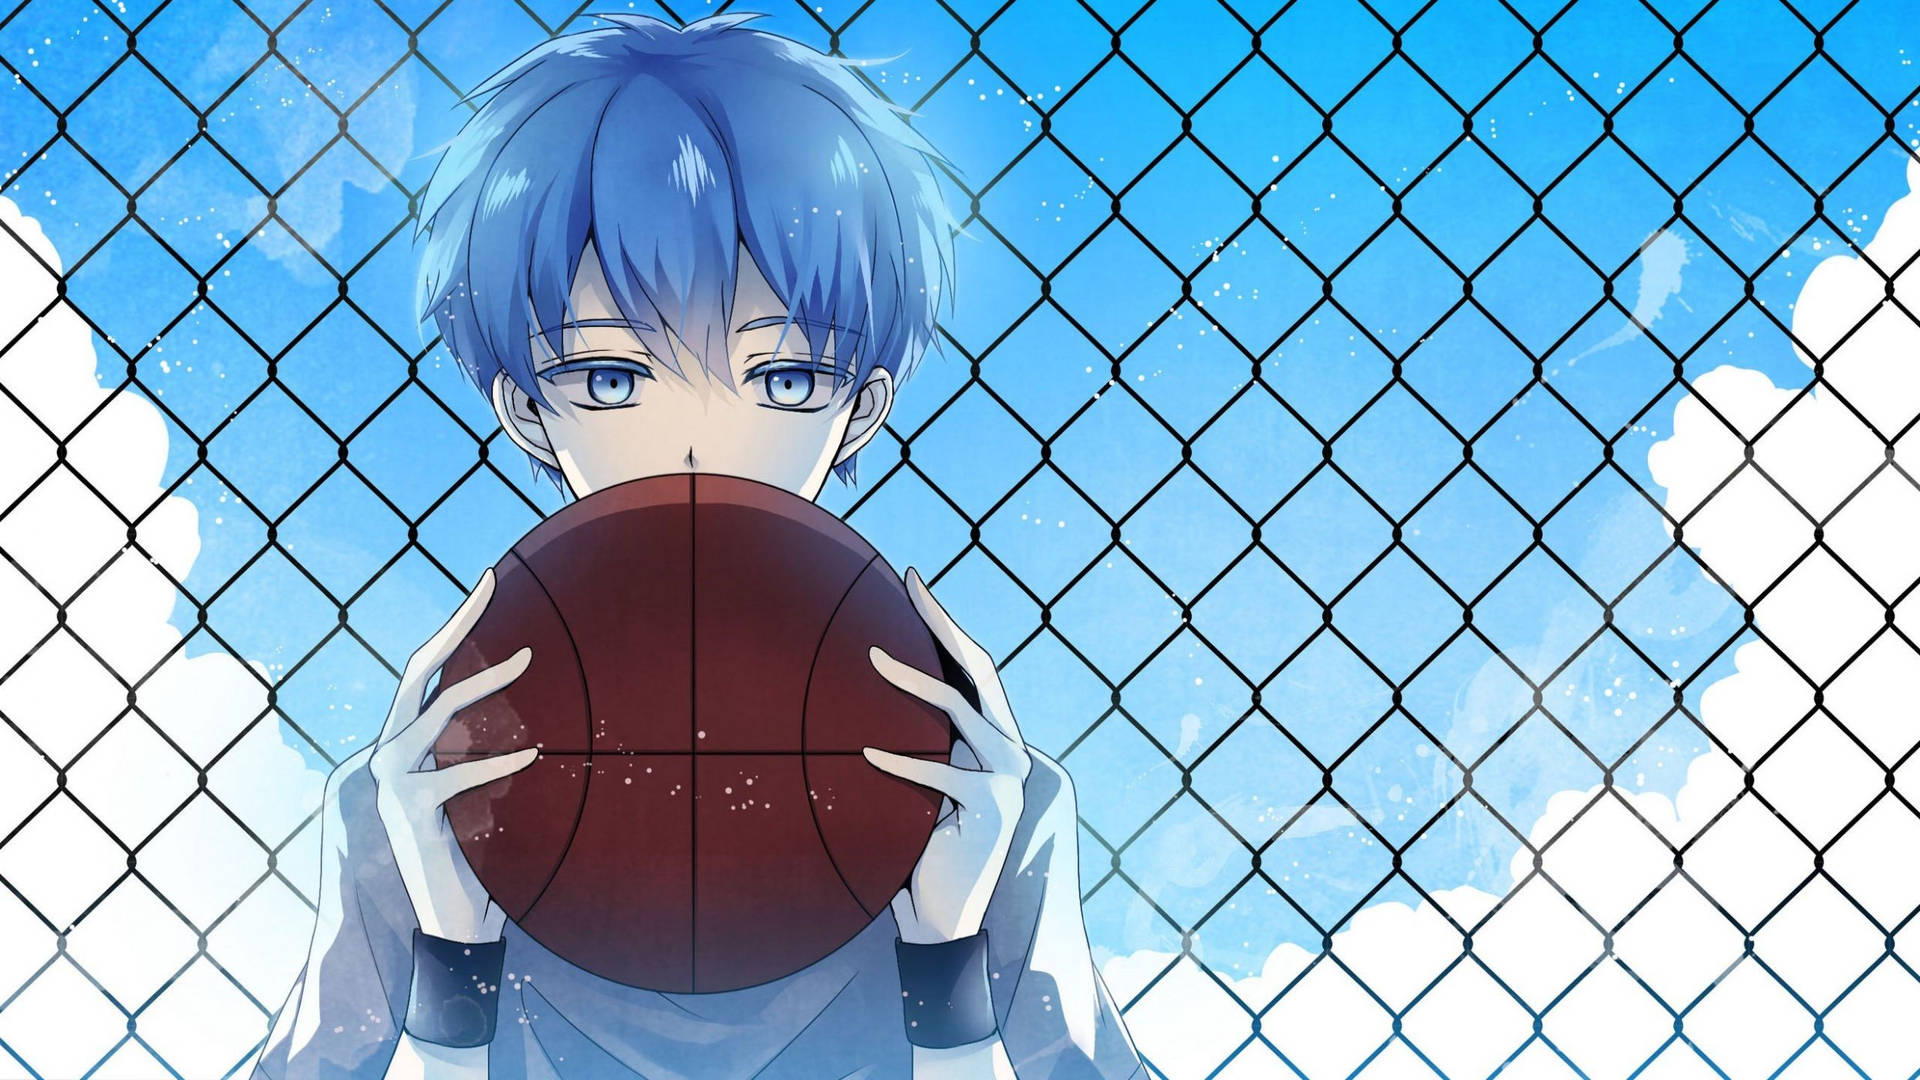 YESASIA: TV Anime Kuroko no Basketball Solo Mini Album Vol.1 Kuroko Tetsuya  - Ignite Music - (Japan Version) CD - Japan Animation Soundtrack, Ono  Kensho, lantis - Japanese Music - Free Shipping - North America Site